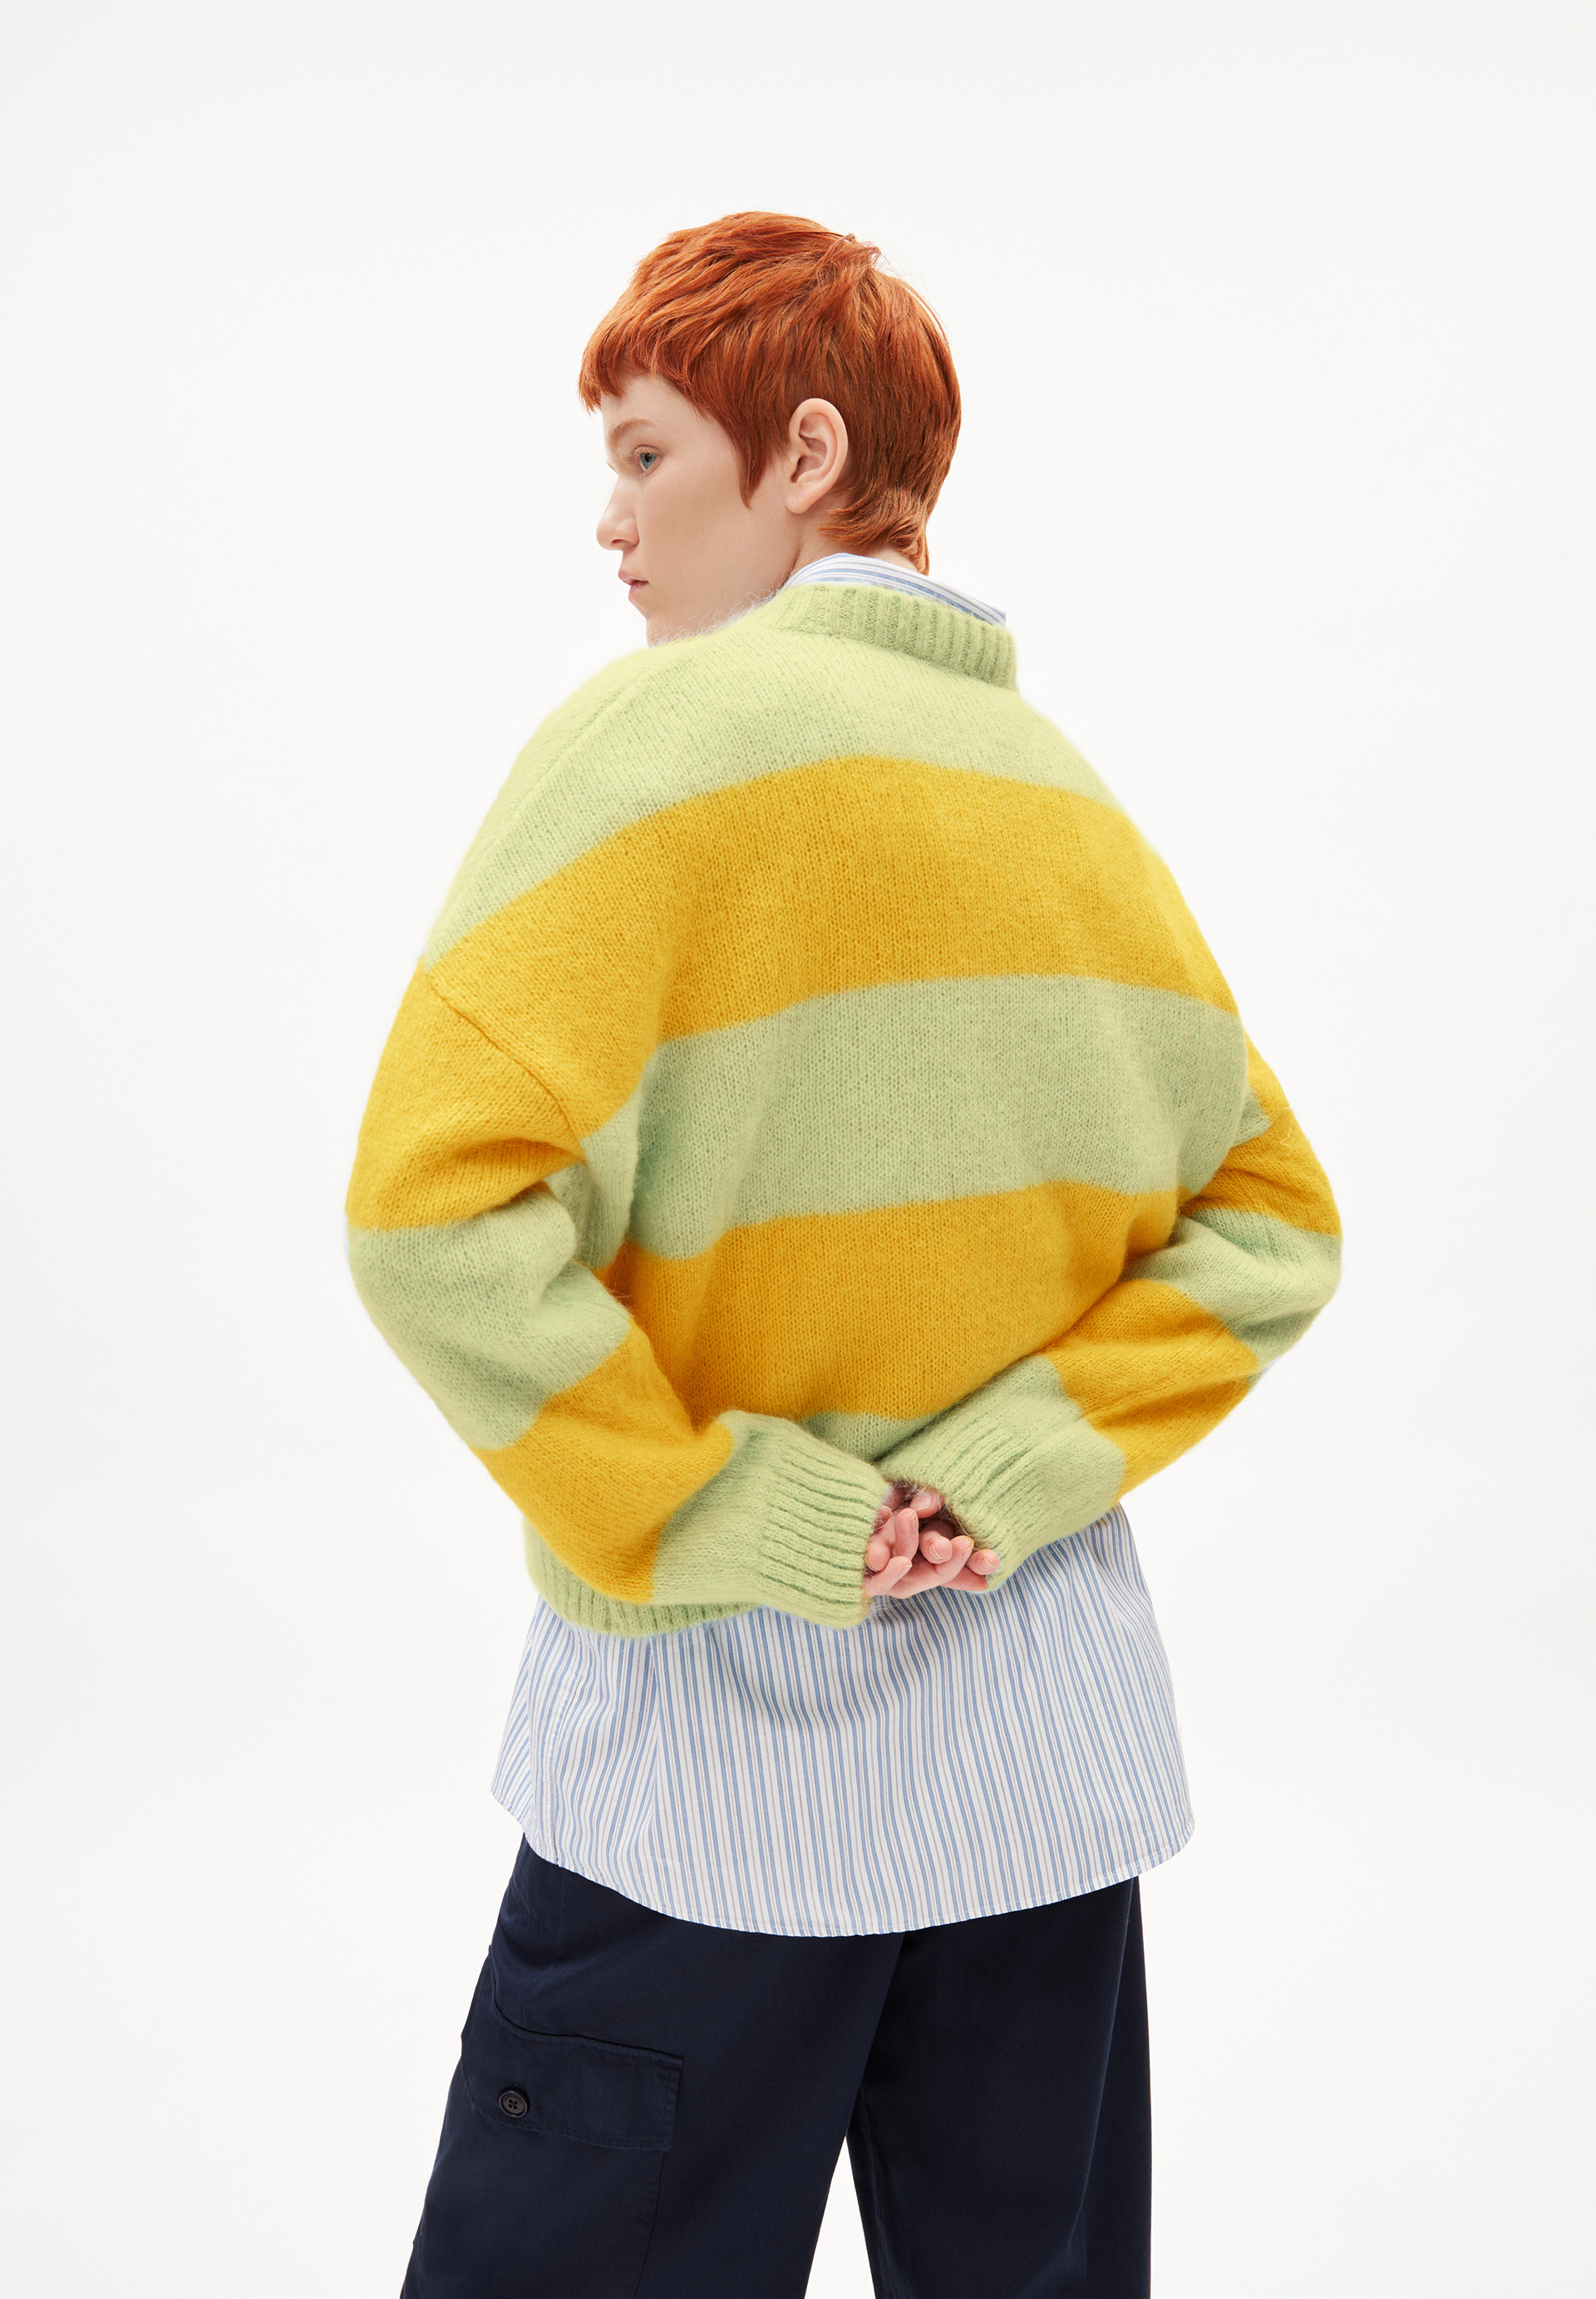 SURI INARAA AW Sweater Oversized Fit made of Alpaca Wool Mix